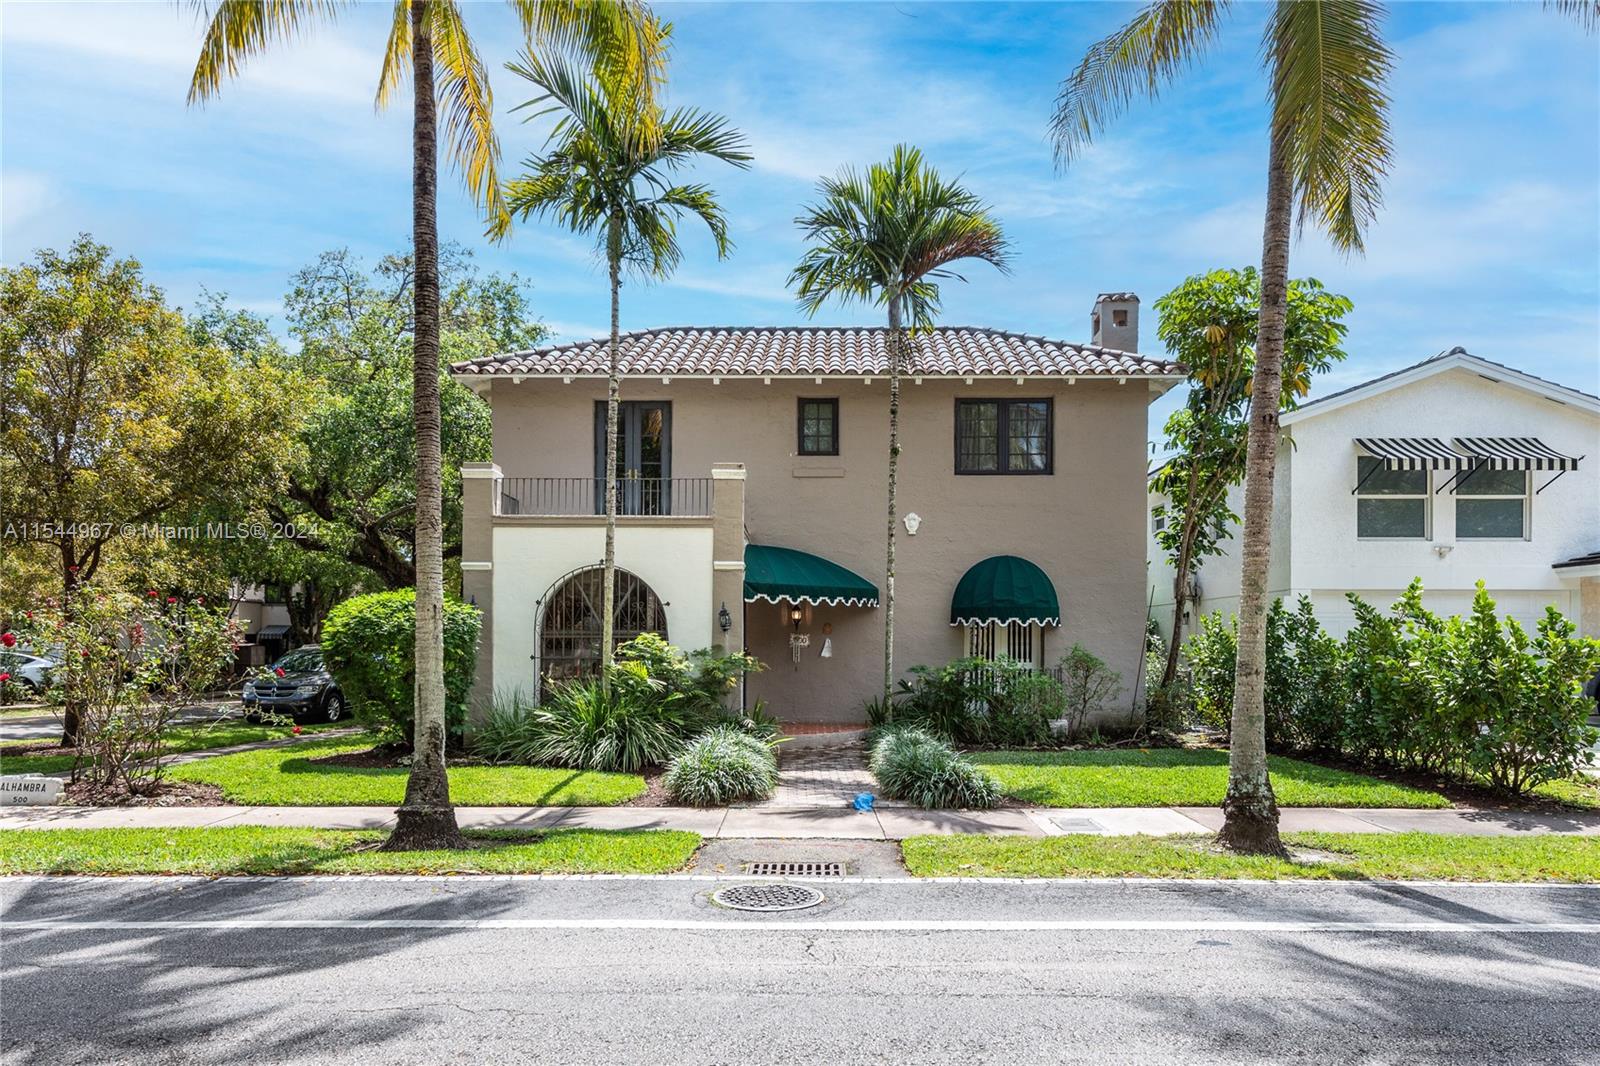 Property for Sale at 500 Alhambra Cir Cir, Coral Gables, Broward County, Florida - Bedrooms: 4 
Bathrooms: 3  - $1,995,000